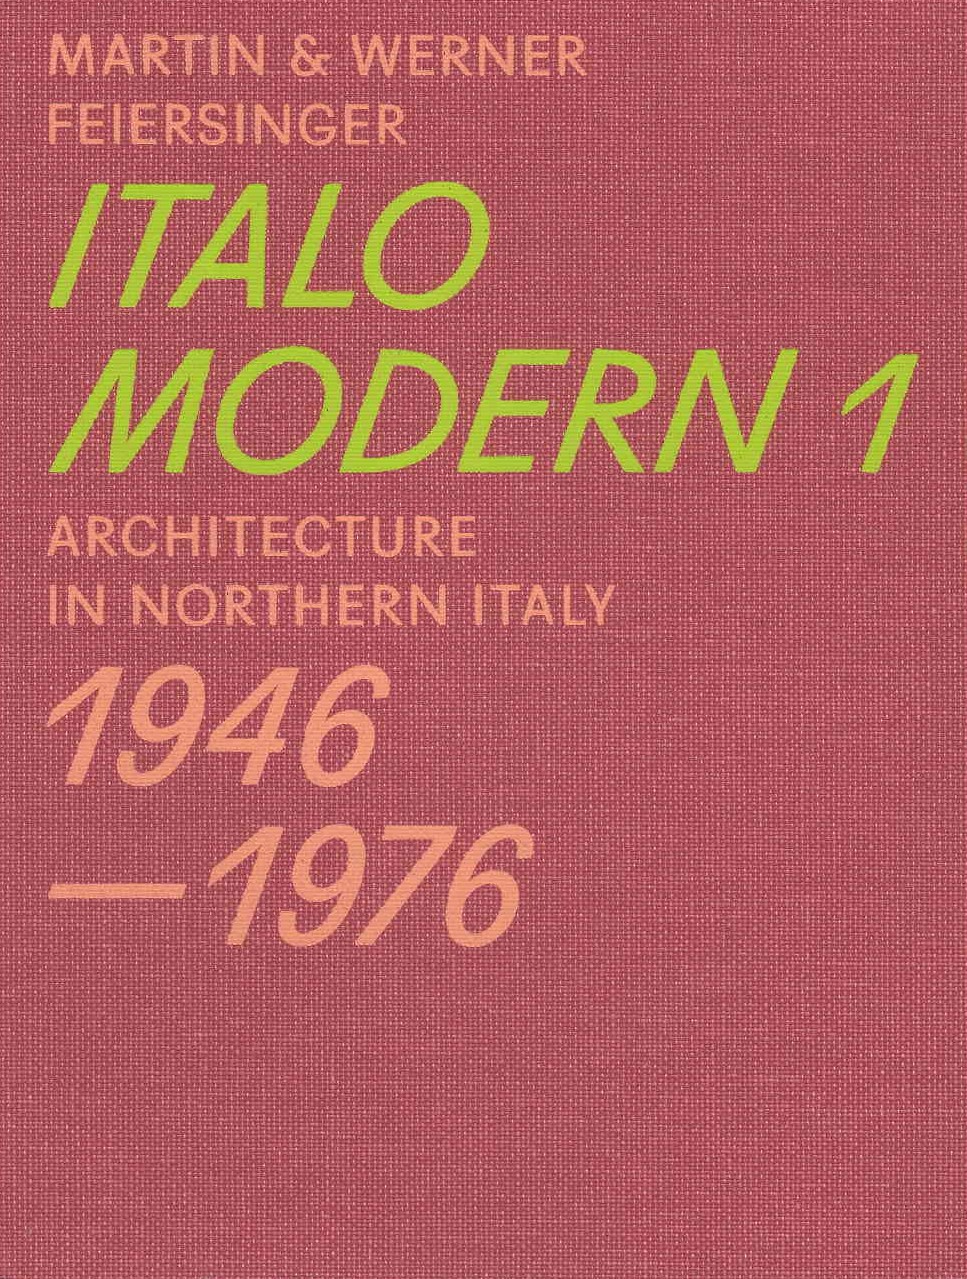 Italomodern 1 : architecture in Northern Italy : 1946-1976